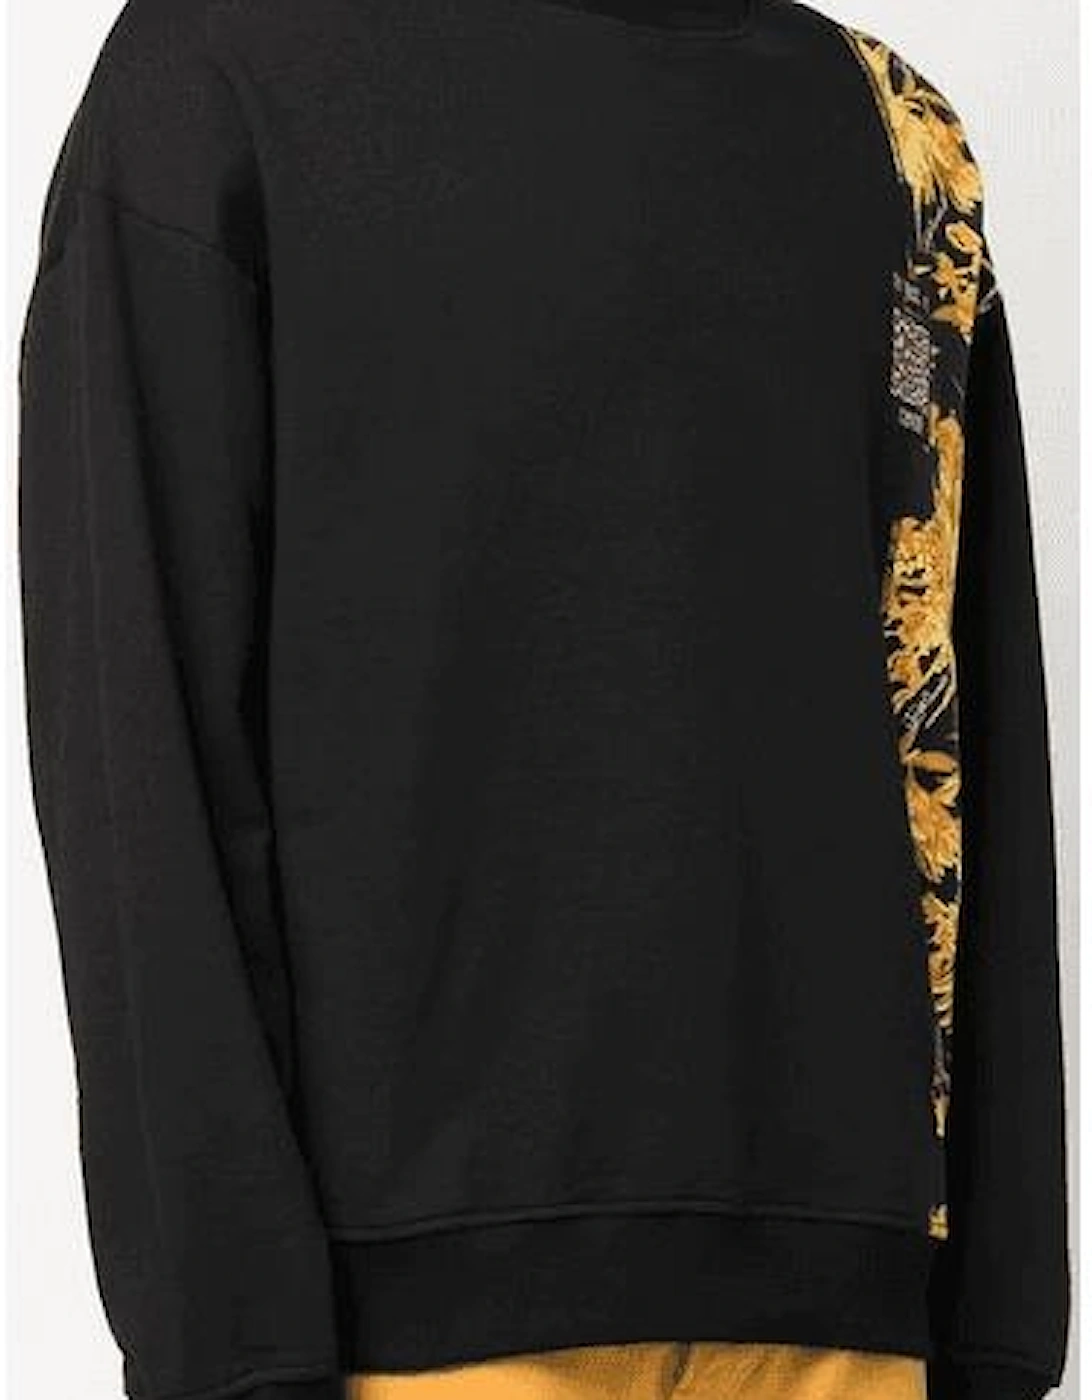 Jungle Cotton Black/Gold Baroque Print Sweatshirt